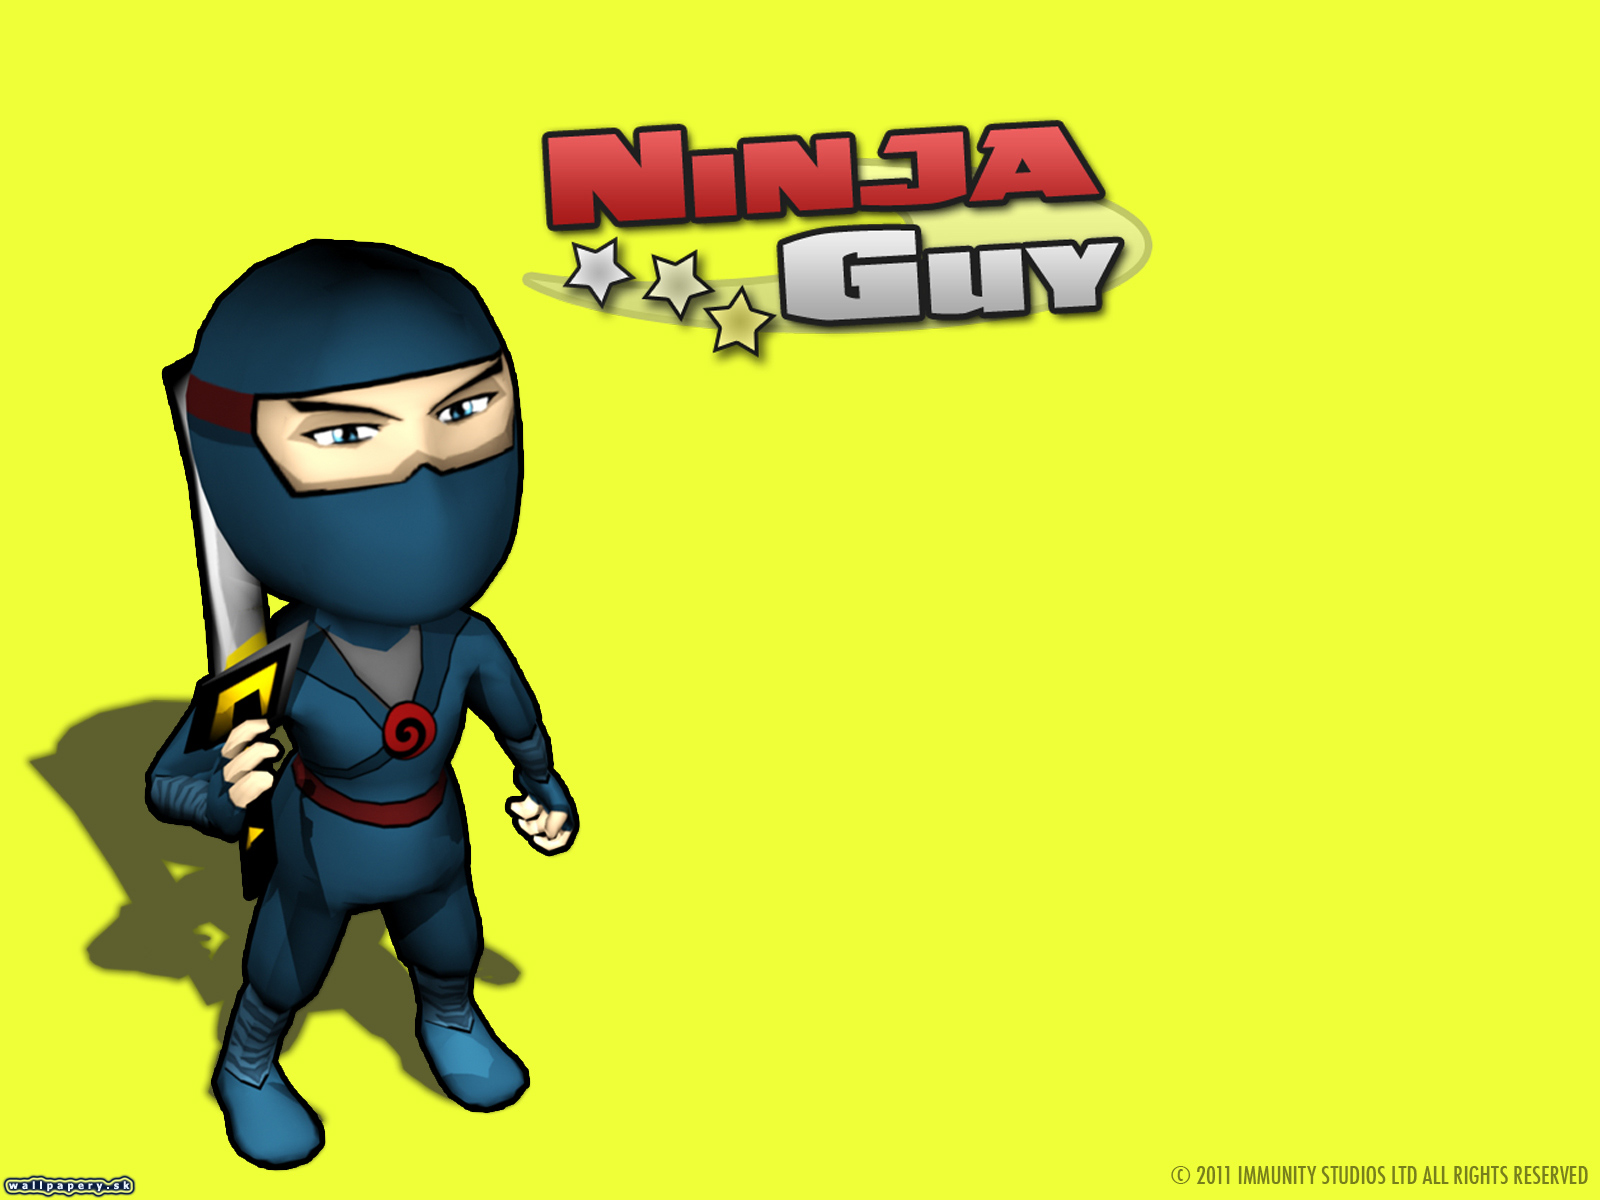 Ninja Guy - wallpaper 3